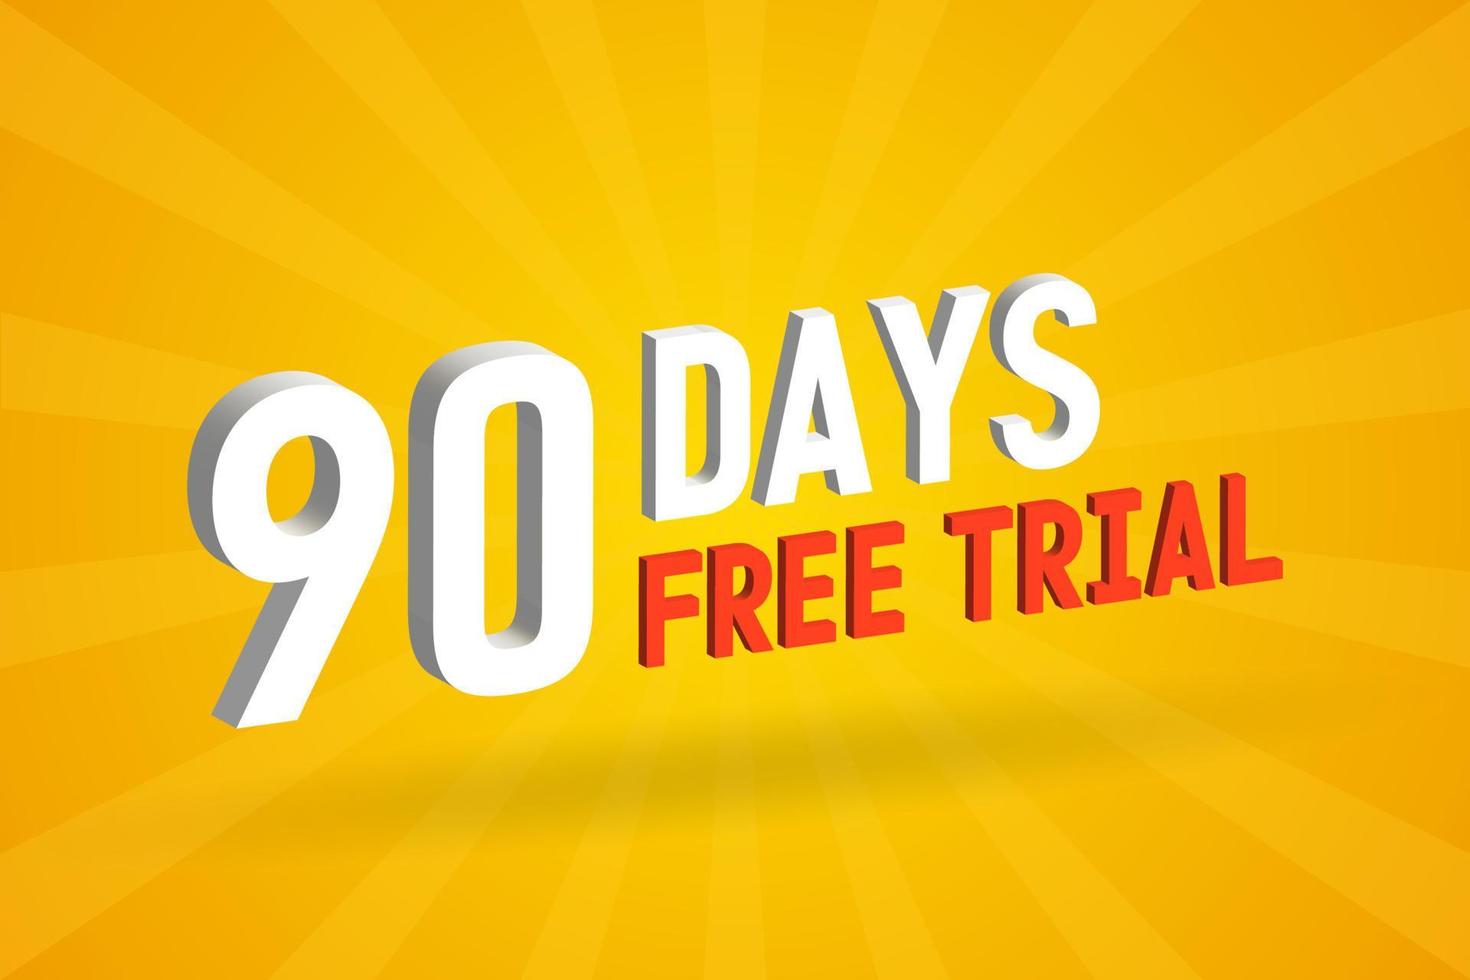 oferta gratuita 90 días de prueba gratuita texto 3d stock vector